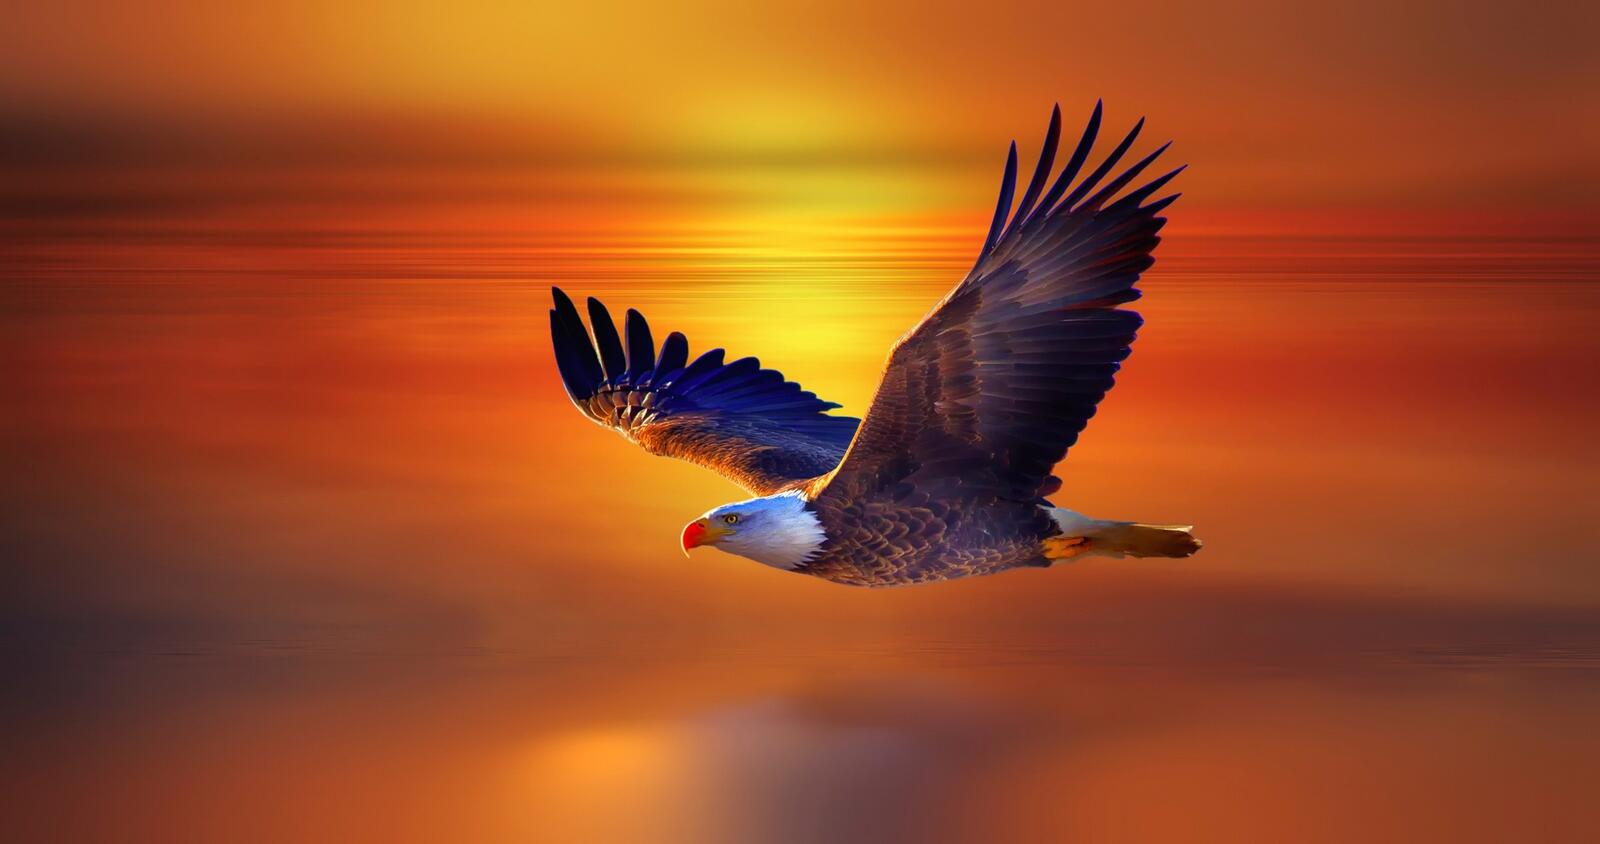 Wallpapers flying eagle bird on the desktop